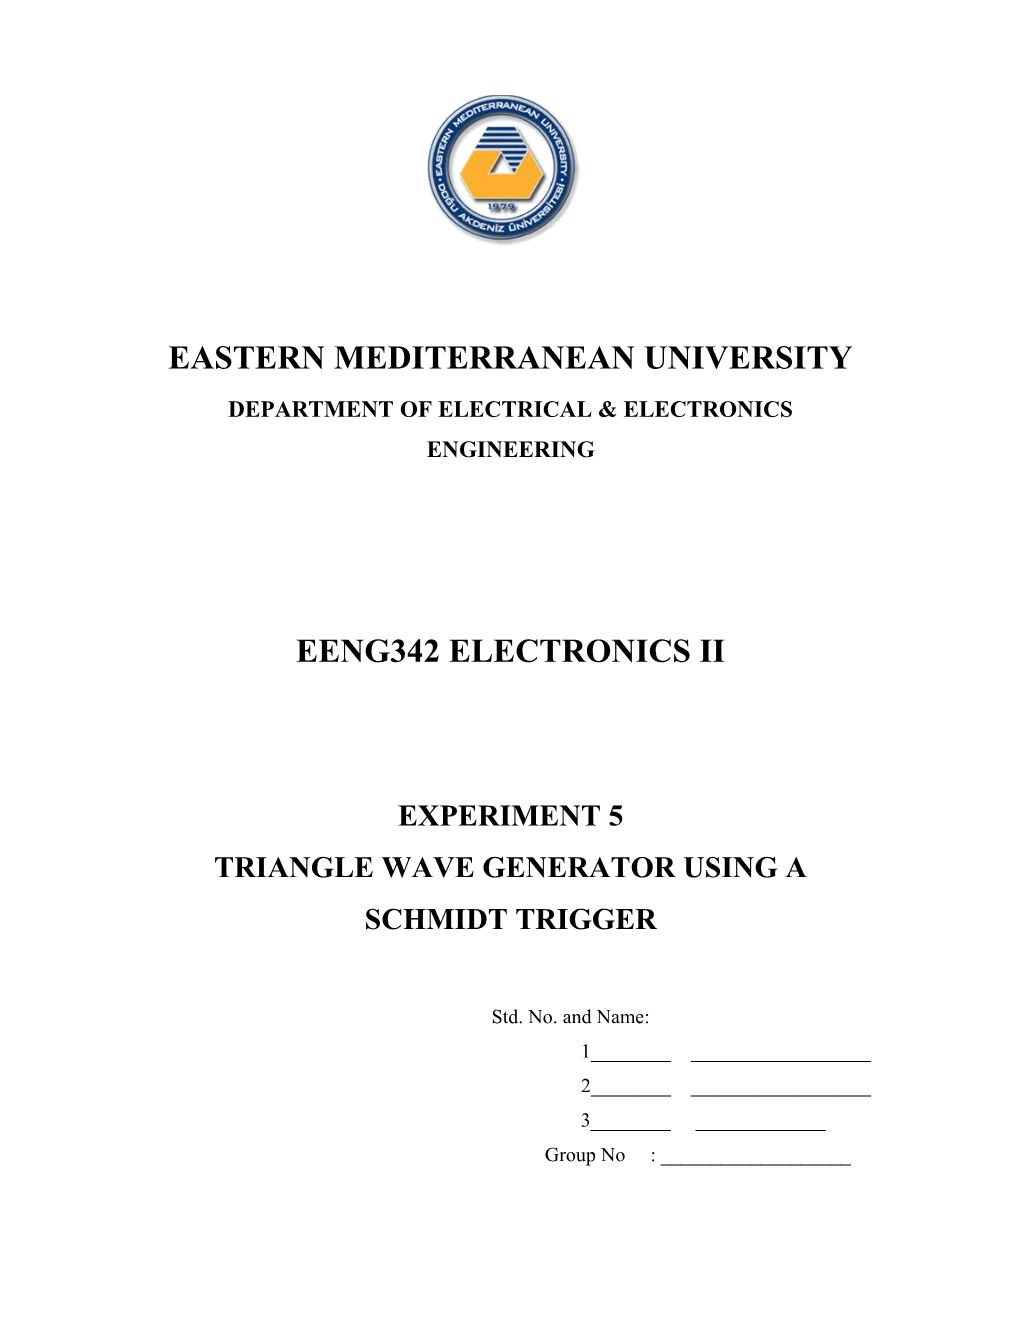 Eastern Meditteranean University